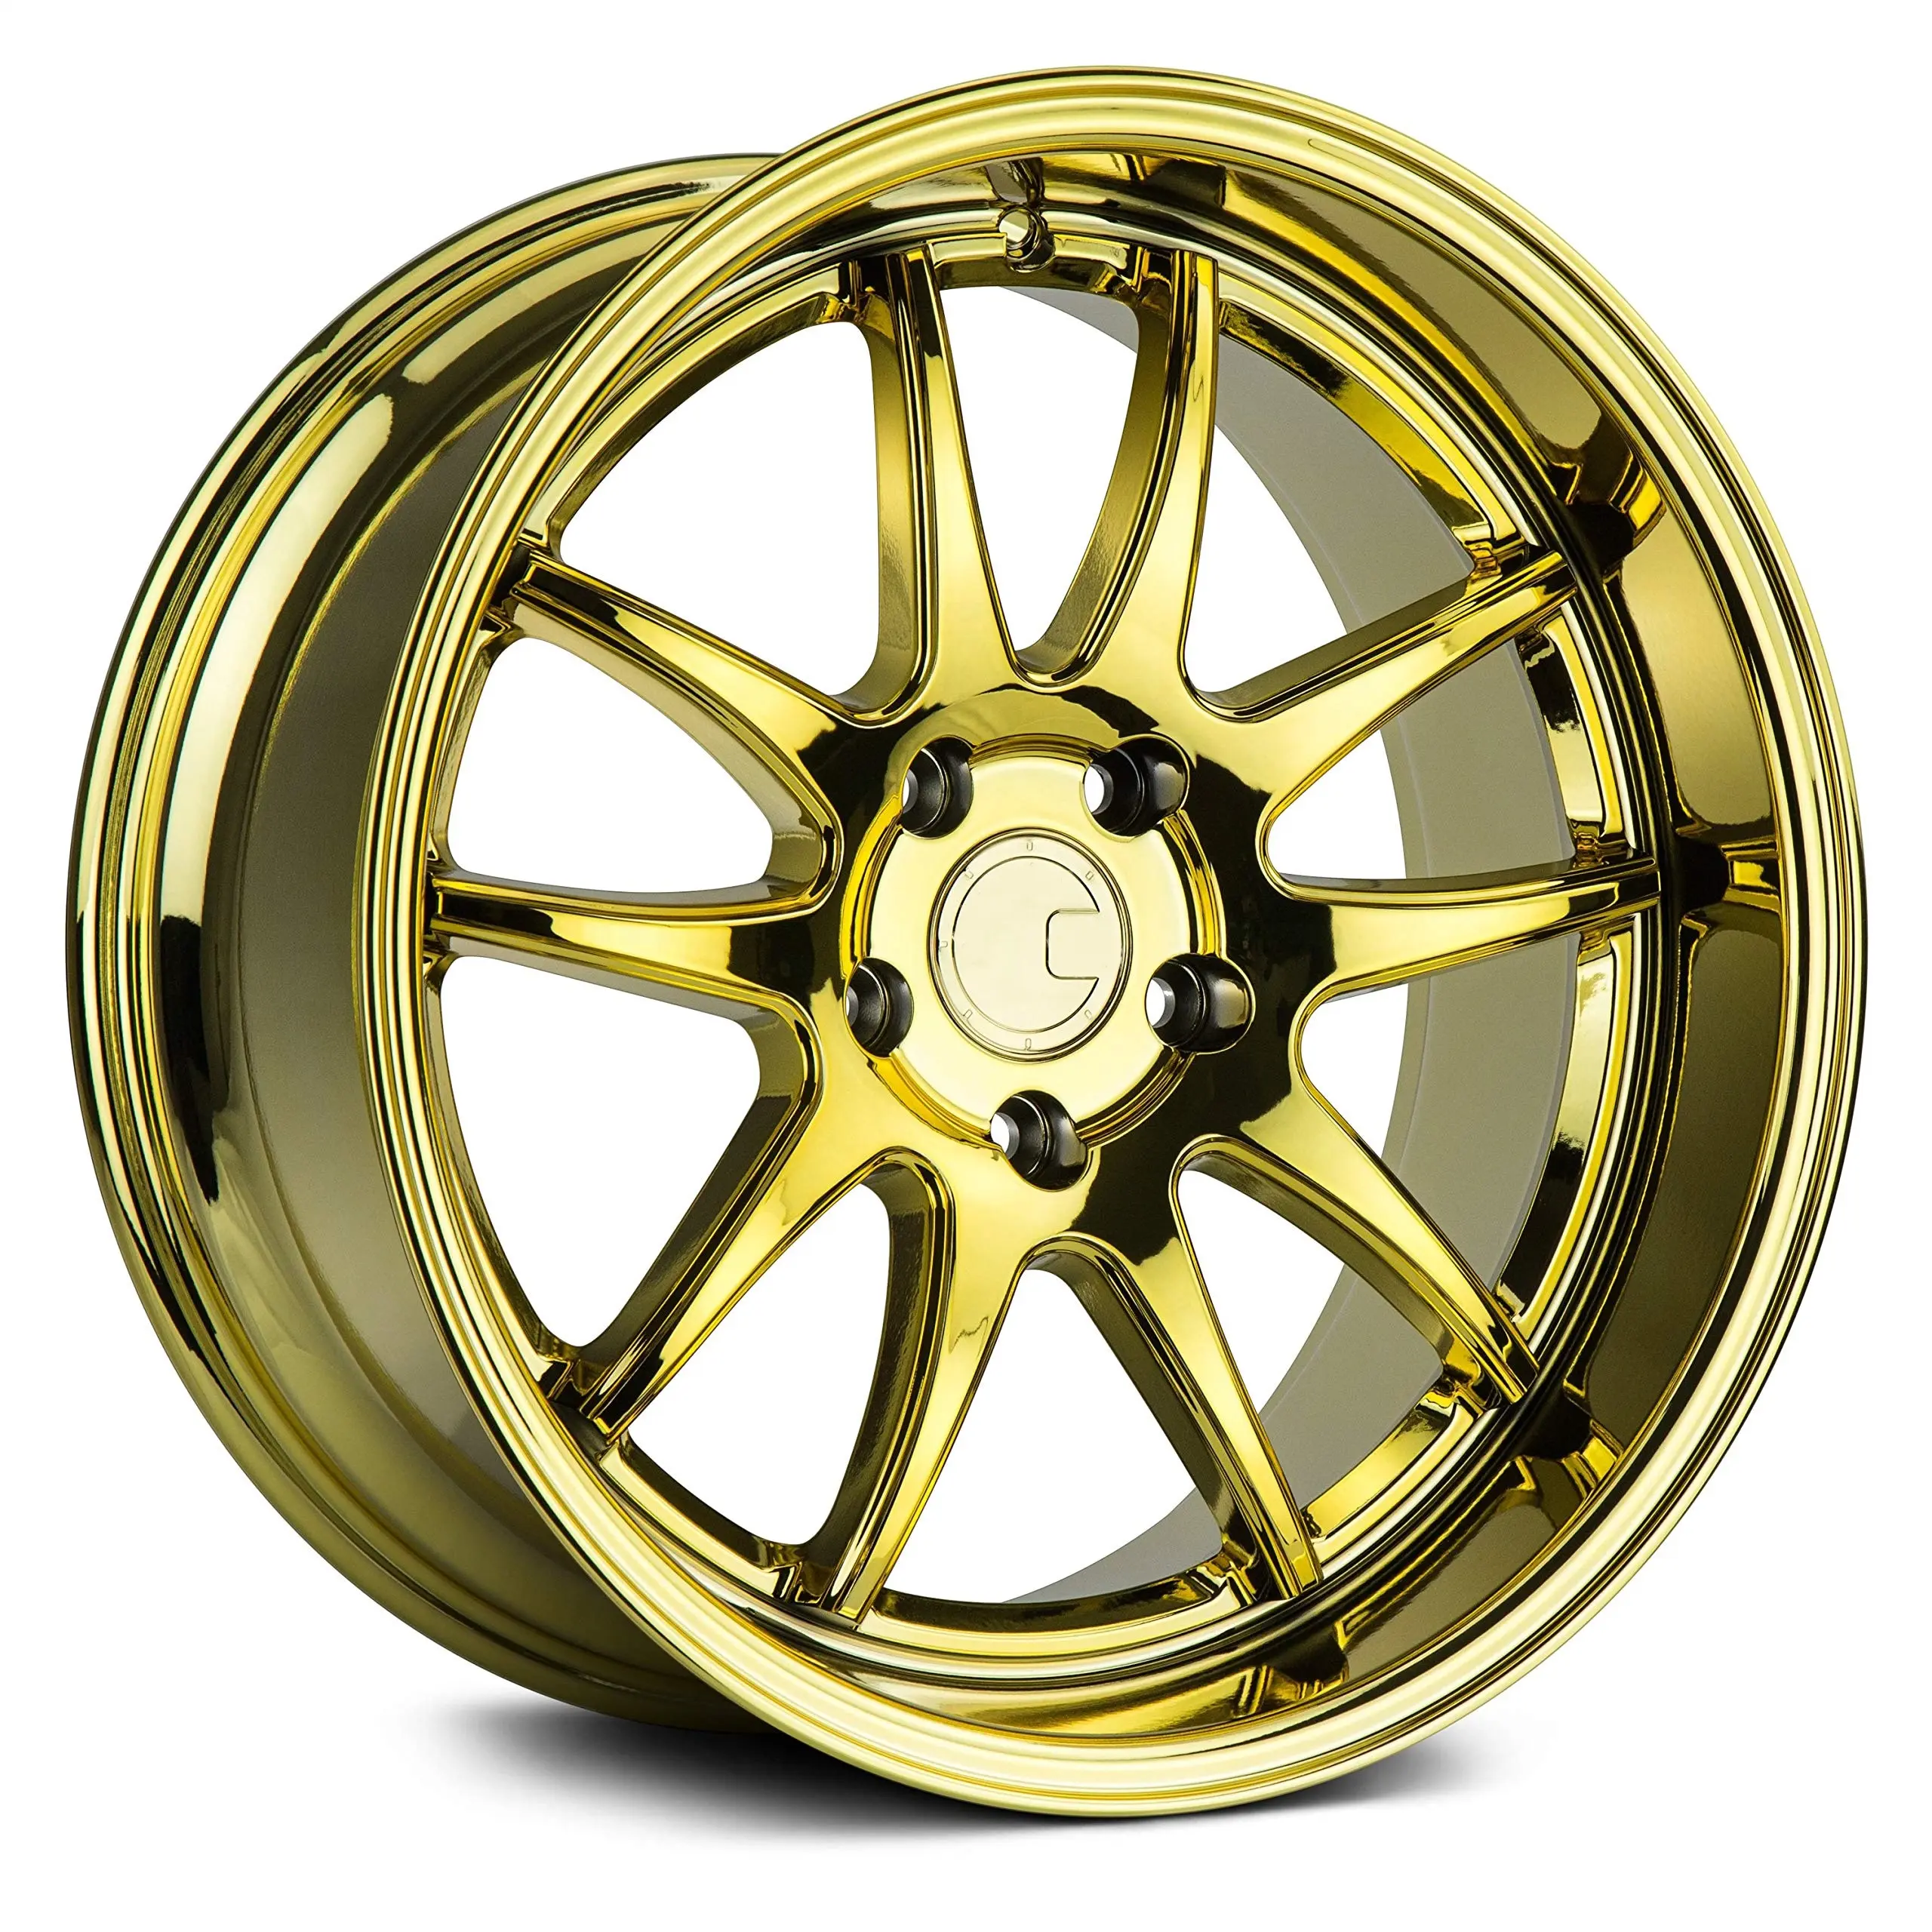 Custom gold colored car alloy aluminum wheels rim forged wheel rims 16 19 20 21 22 Inch 5x130 for car